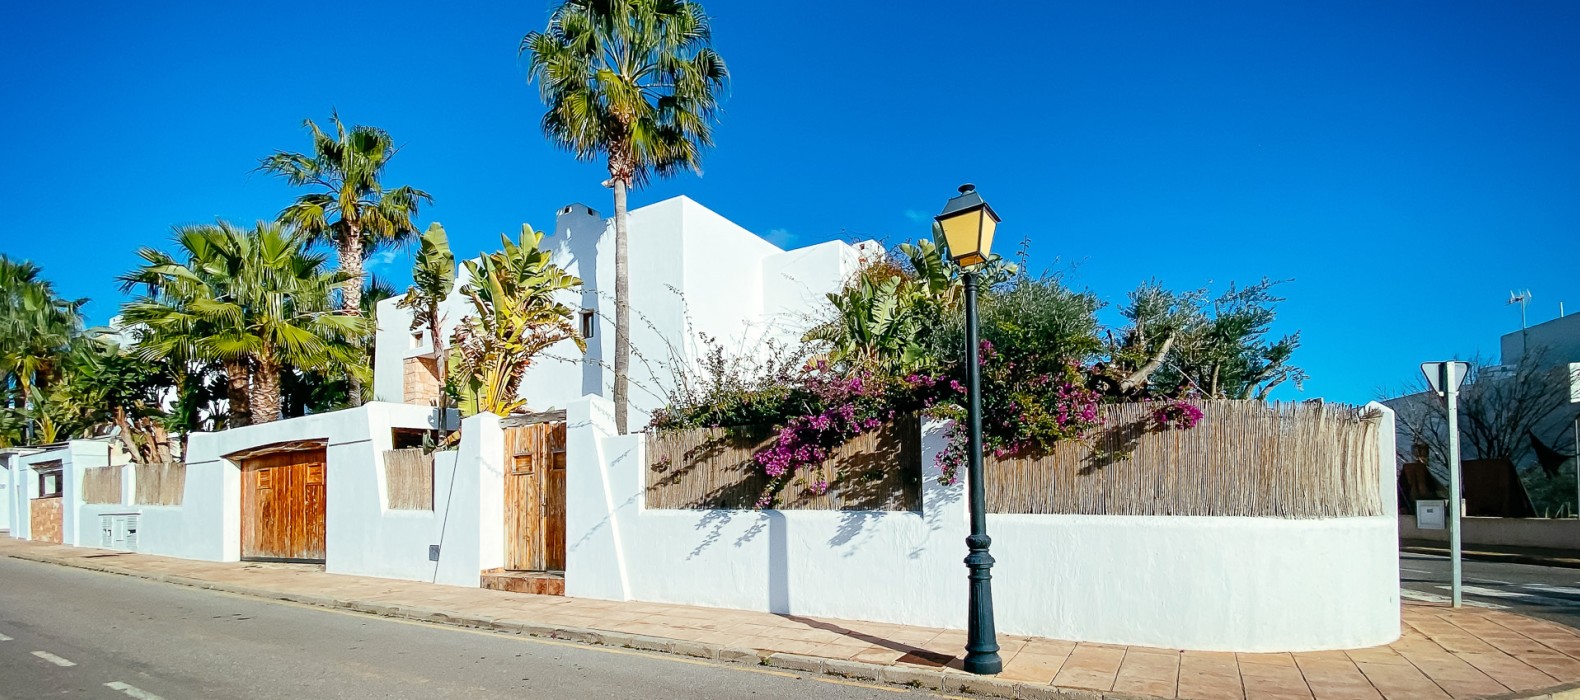 Outside view of Villa Secret Paradise in Ibiza